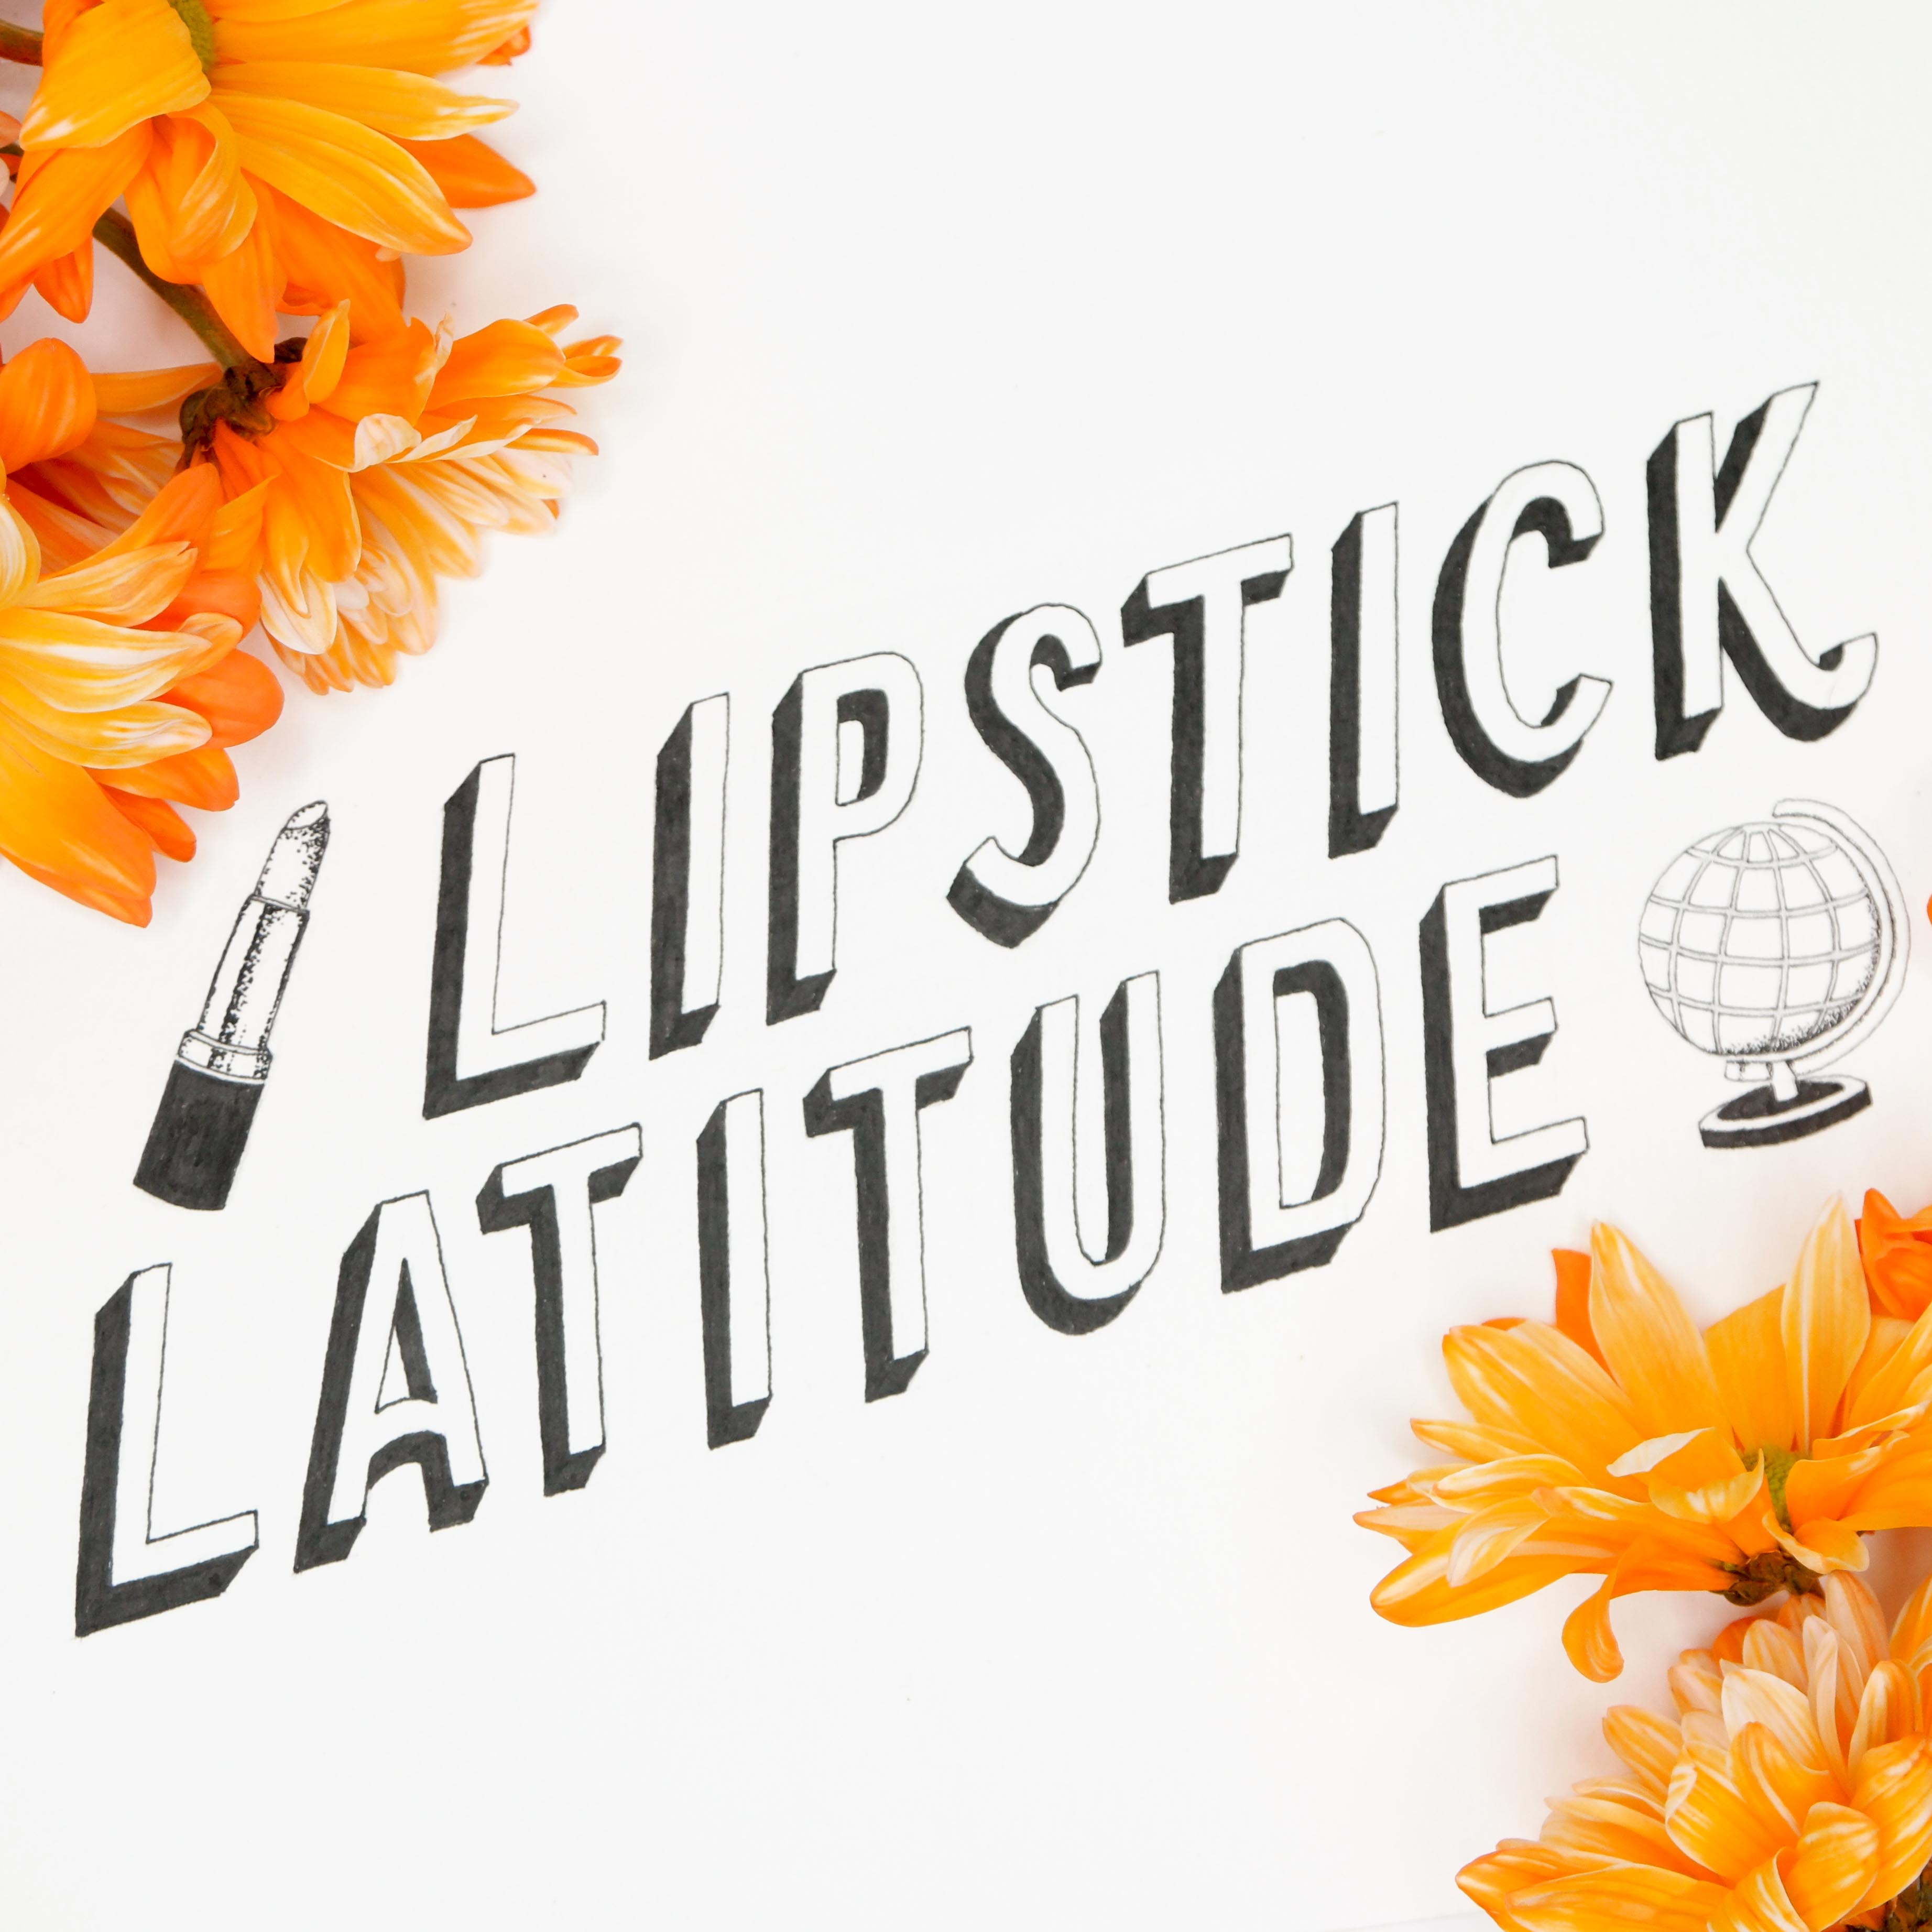 Lipstick Latitiude